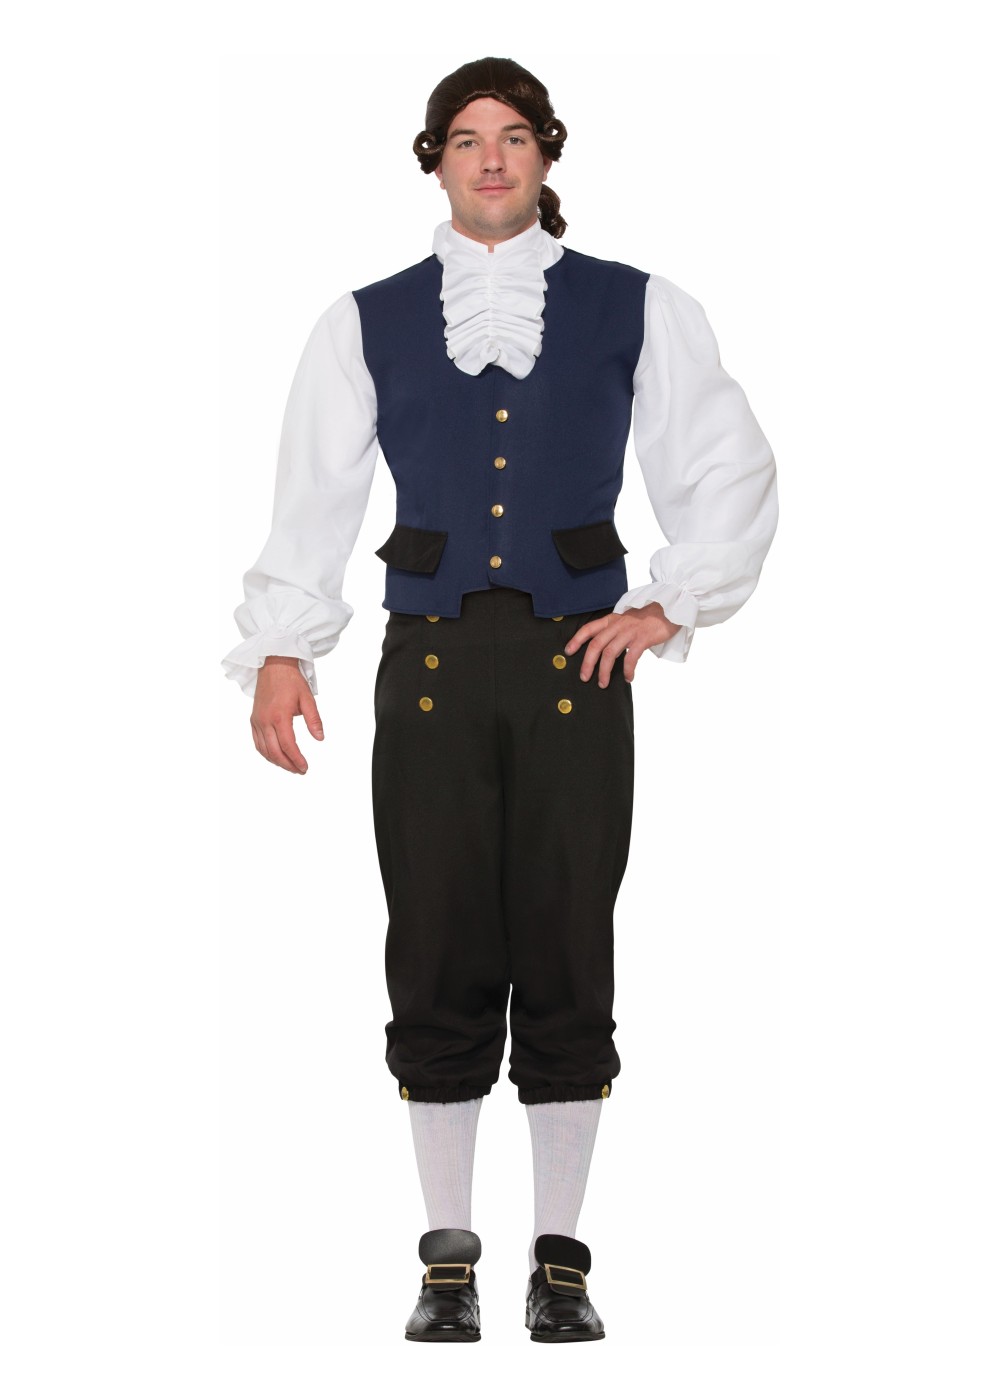 Alexander Hamilton Man Costume